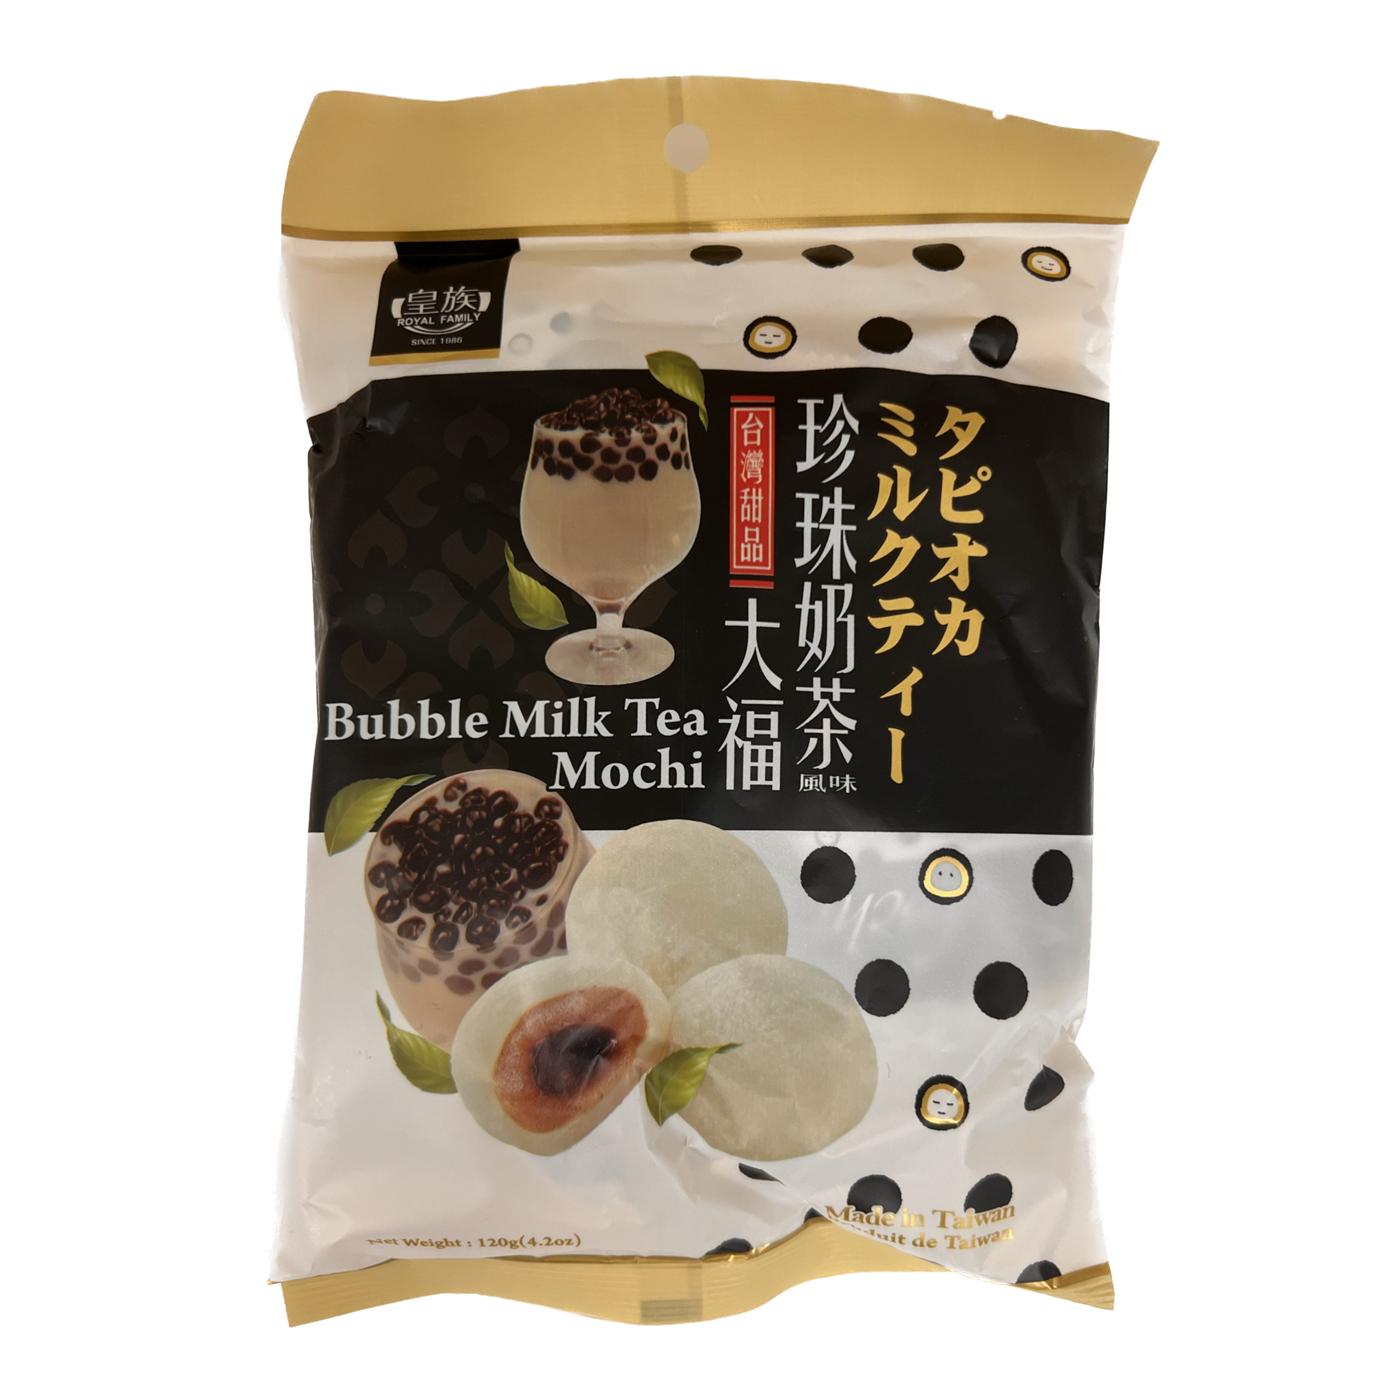 Royal Family Bubble Milk Tea Mochi; image 1 of 3